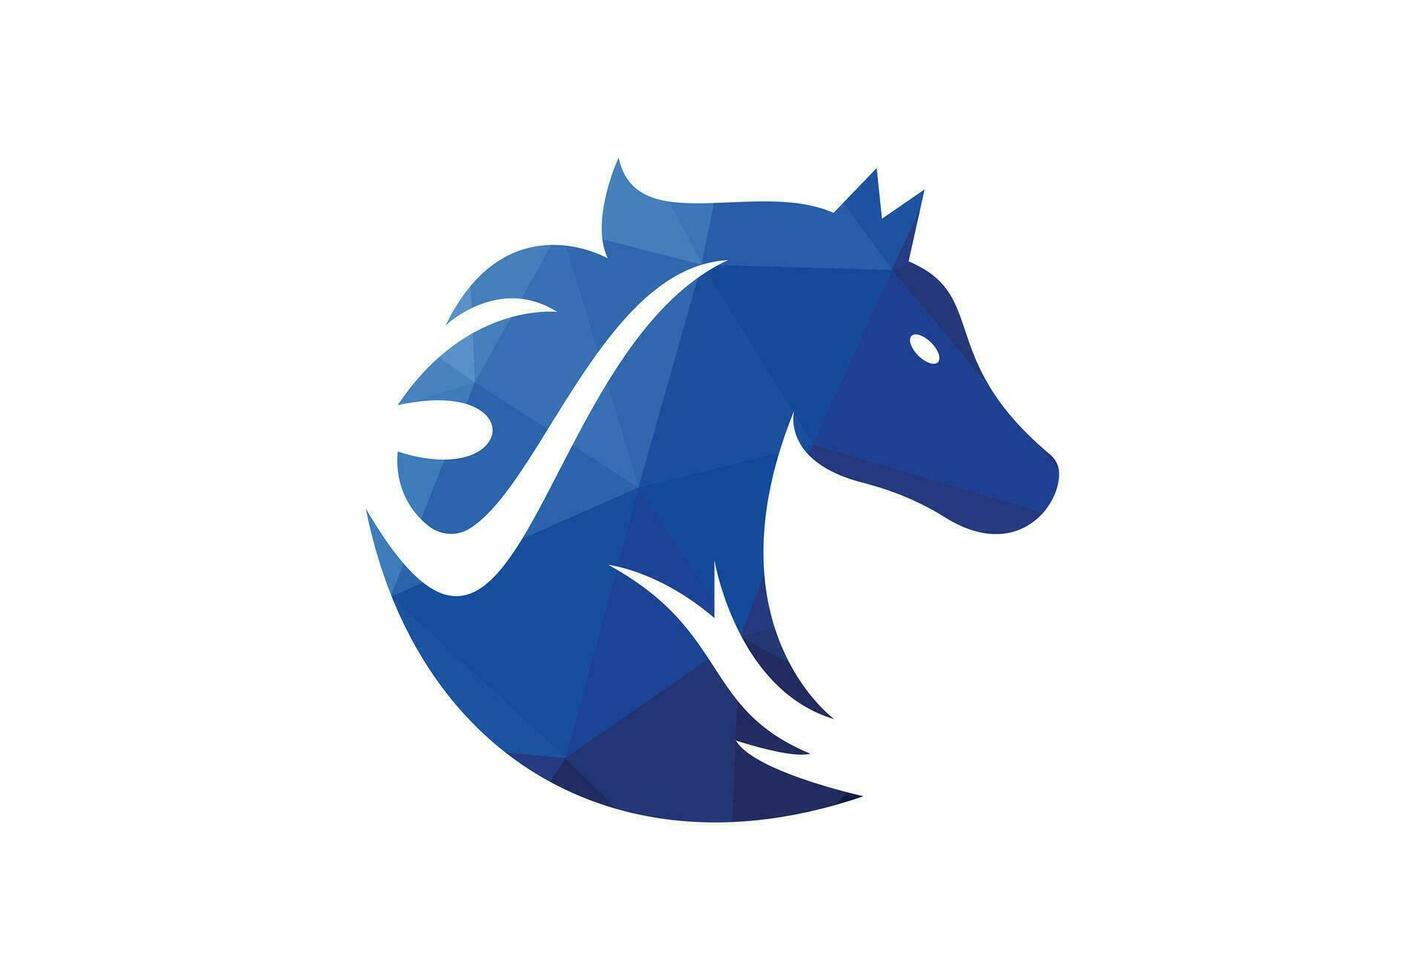 baixo poli e criativo cavalo cabeça logotipo Projeto vetor Projeto modelo